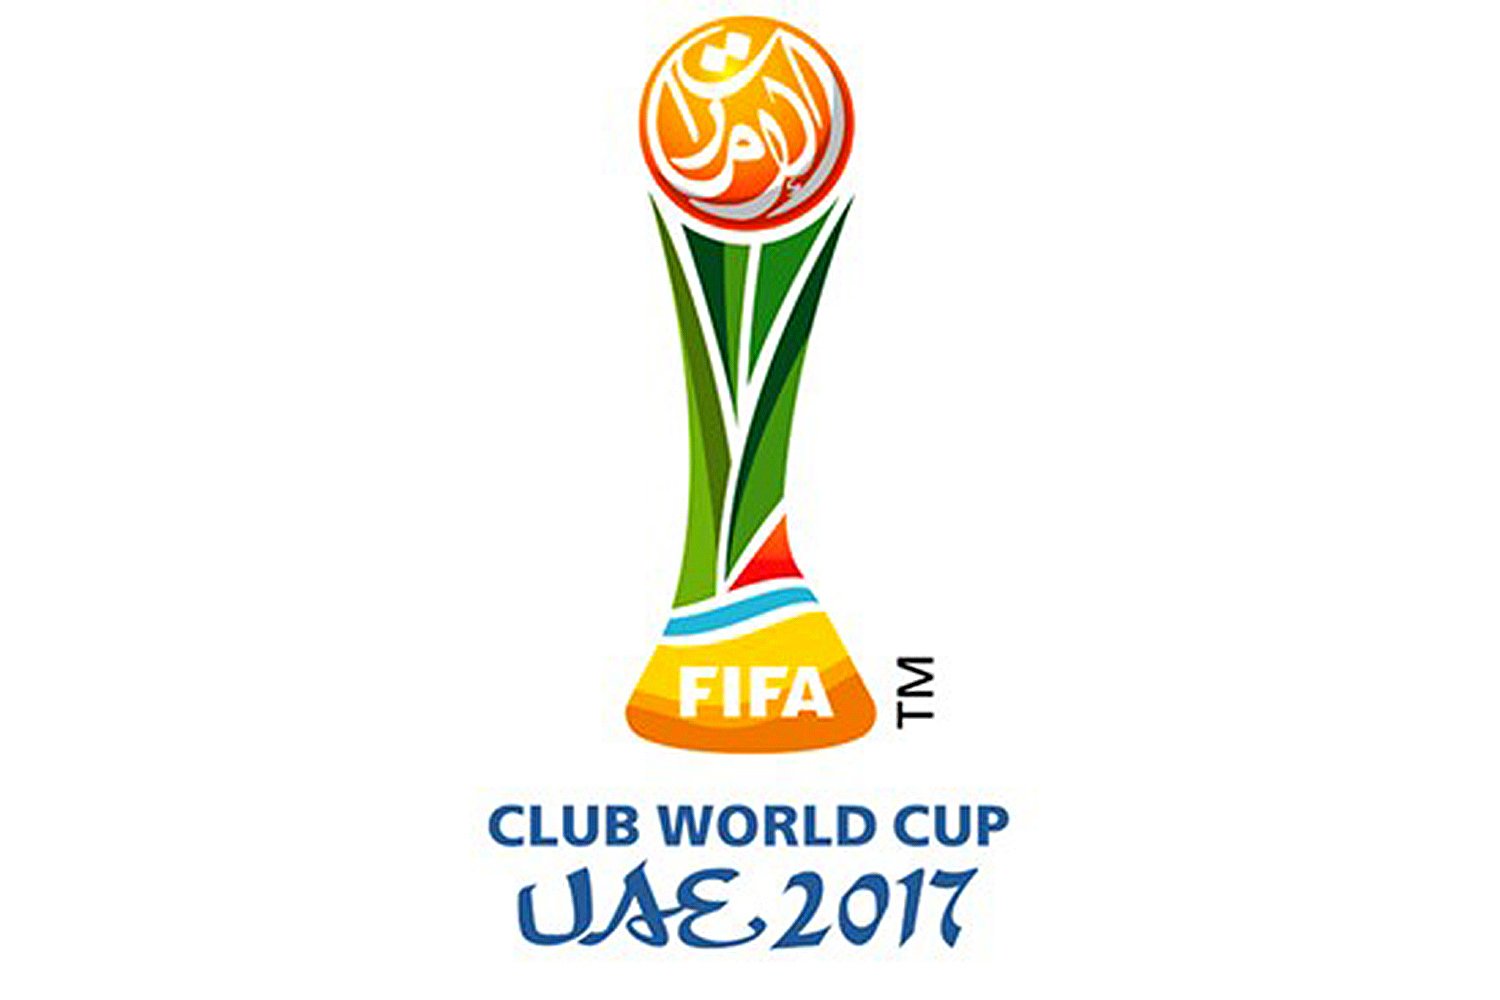 Fifa клуб. FIFA Club World Cup 2022. Club World Cup 2022 лого.